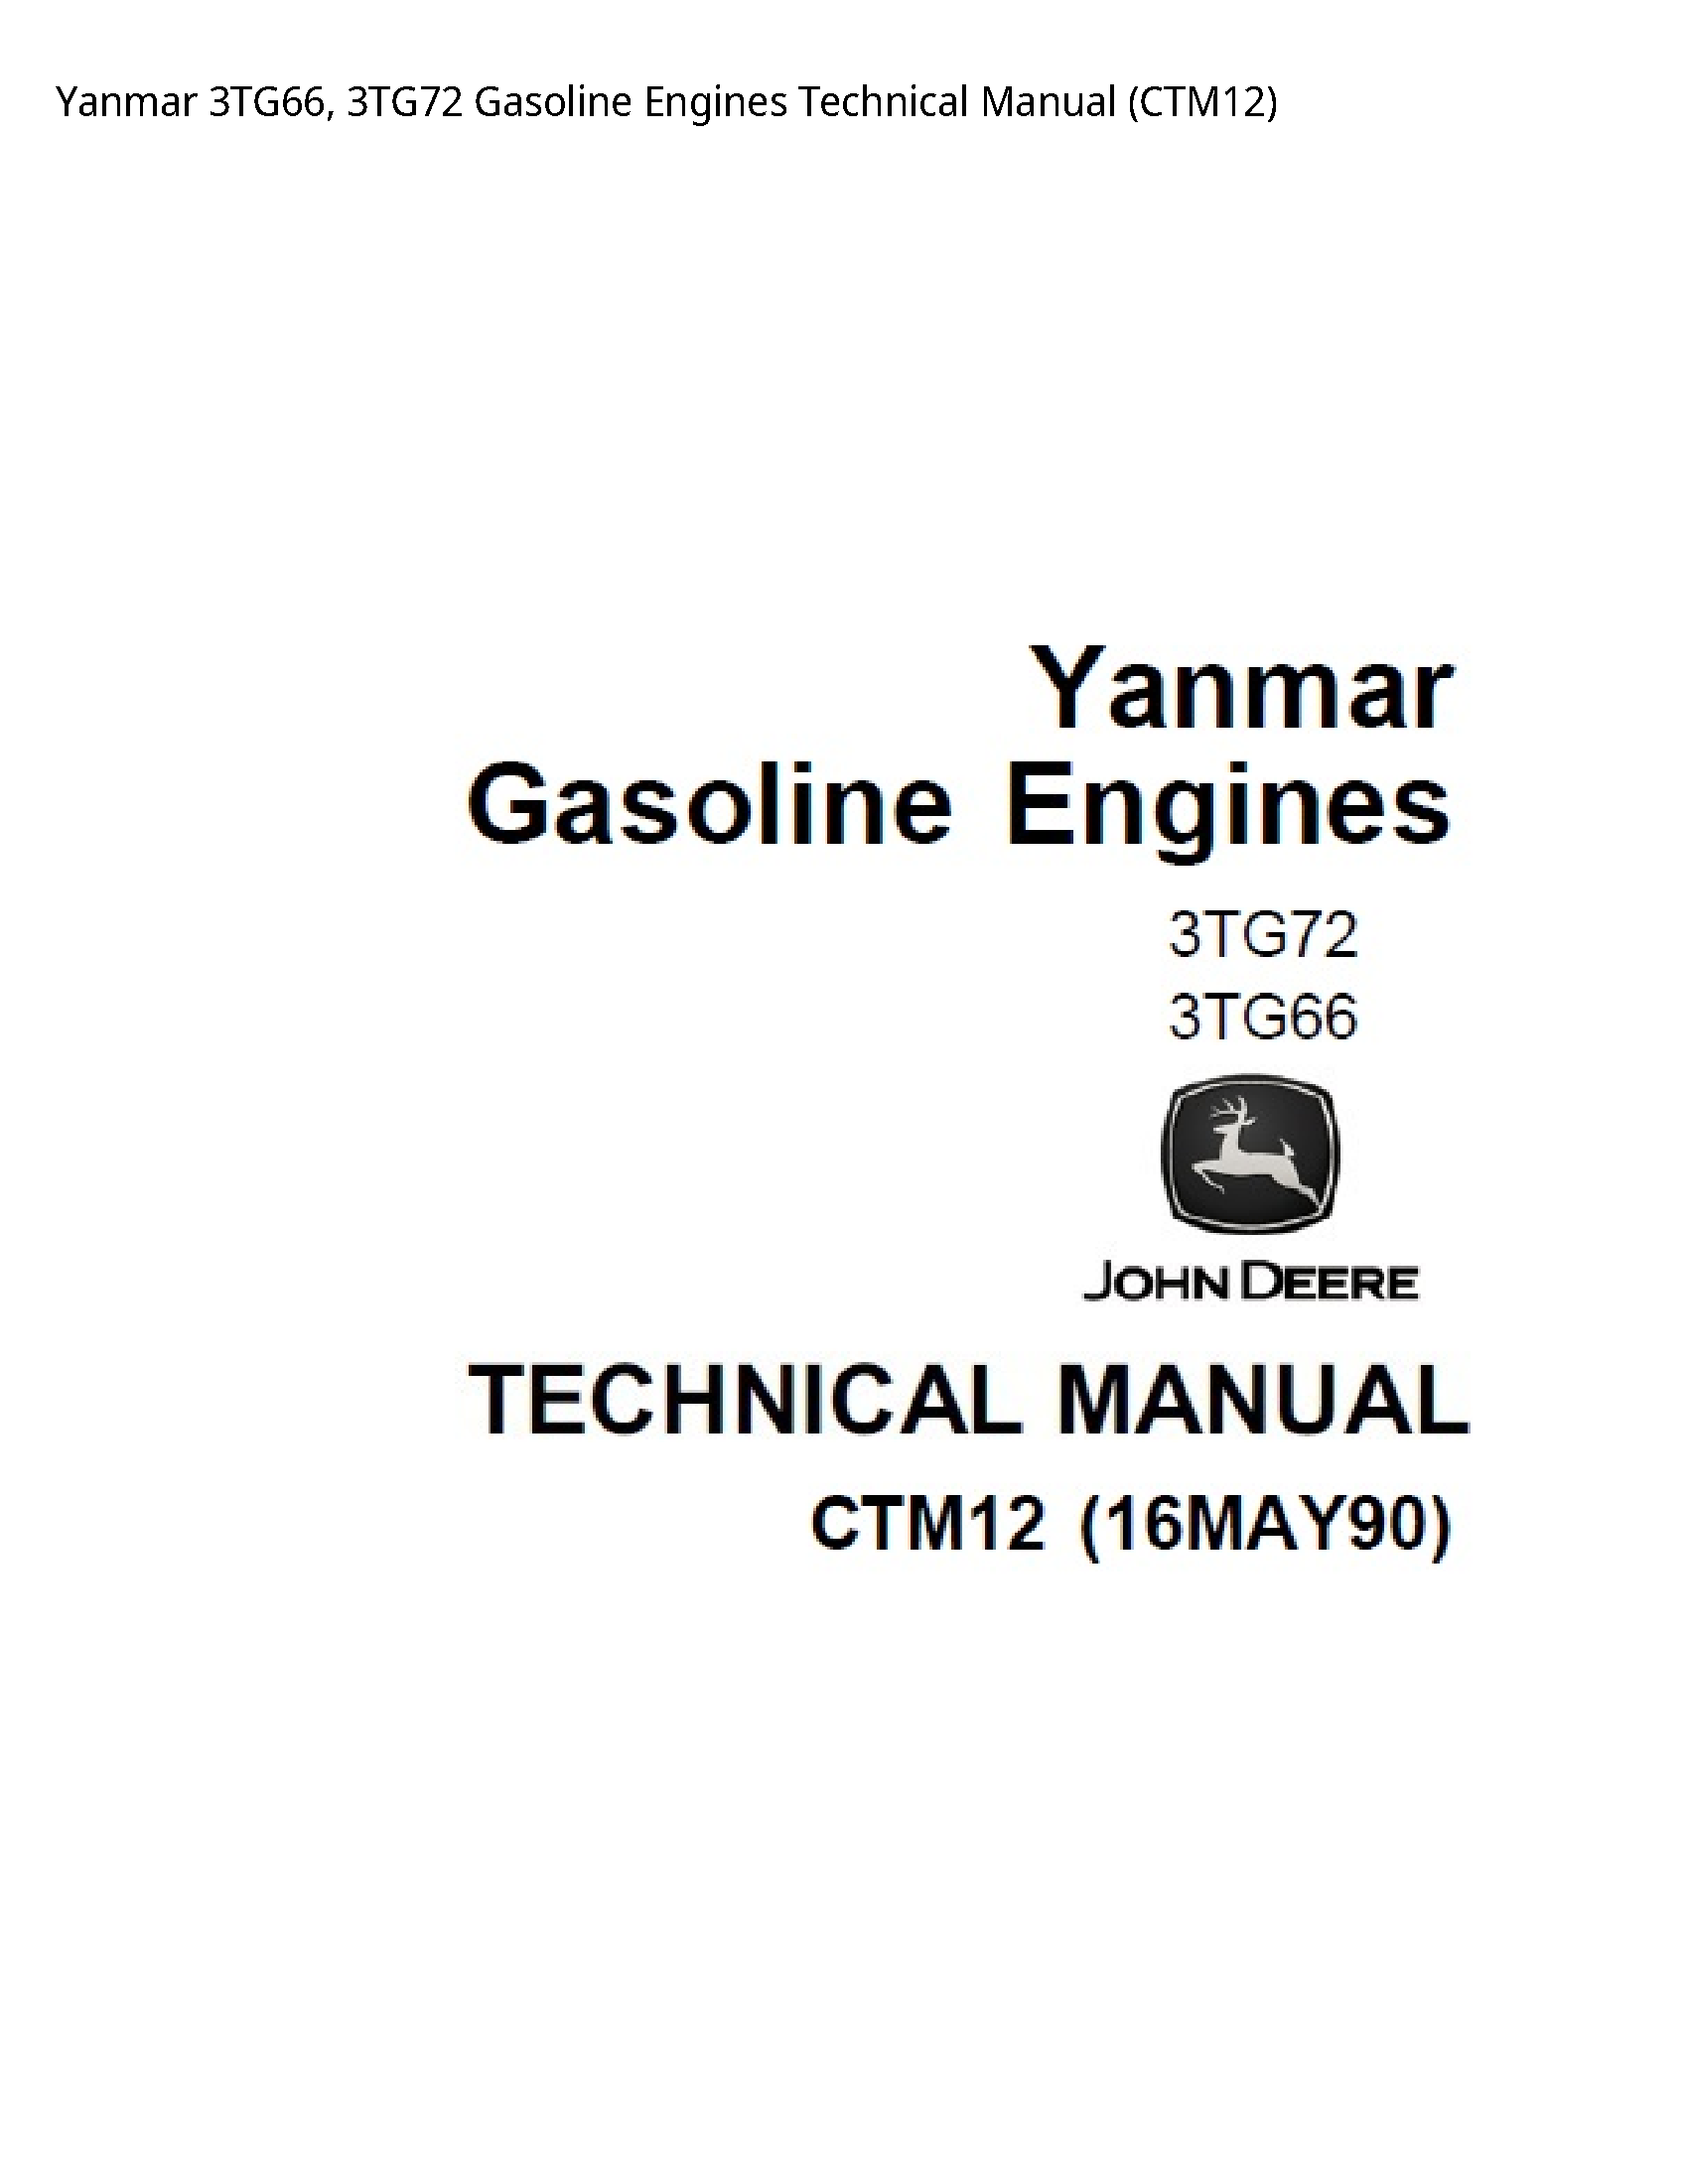 Yanmar 3TG66 Gasoline Engines Technical manual